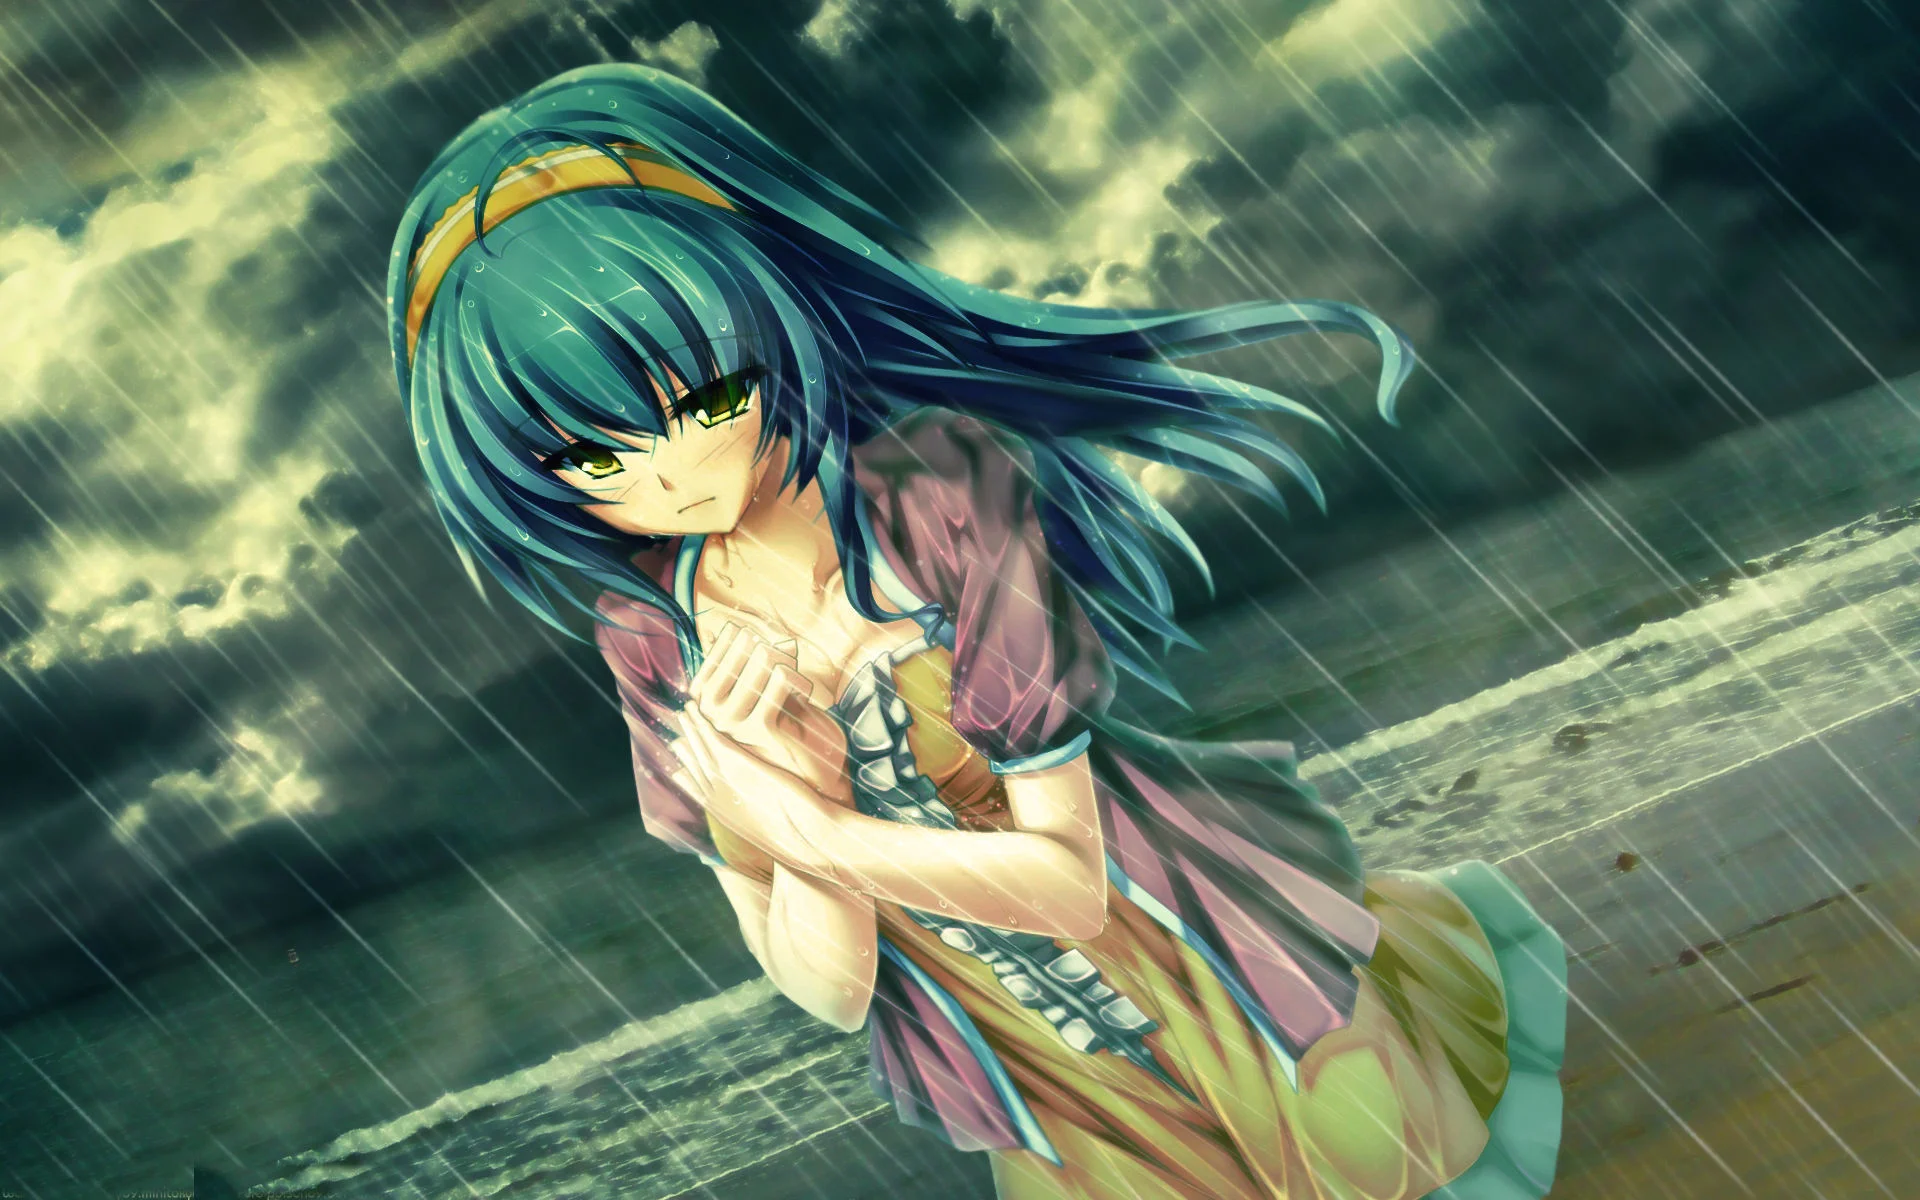 Sad Anime Girl by Animelover7592 on DeviantArt